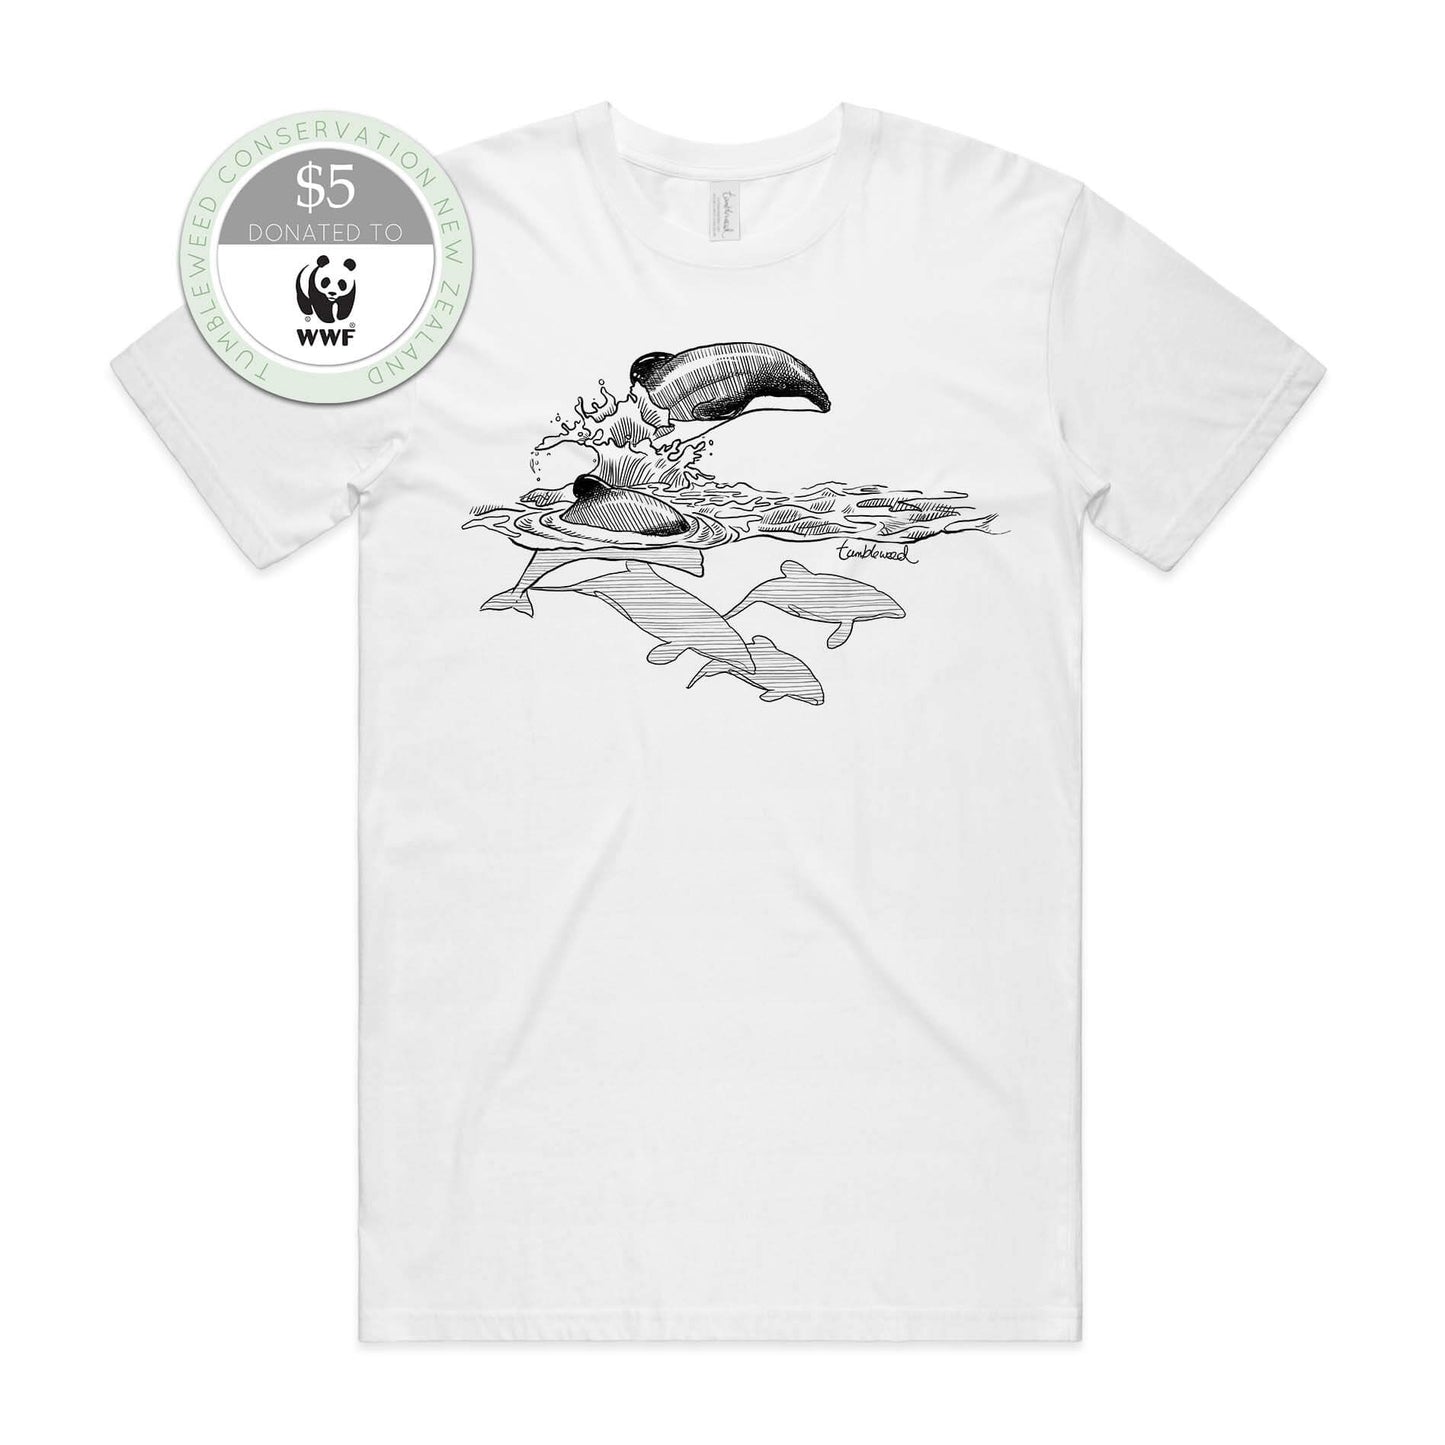 Grey marle, female t-shirt featuring a screen printed Māui dolphin design.